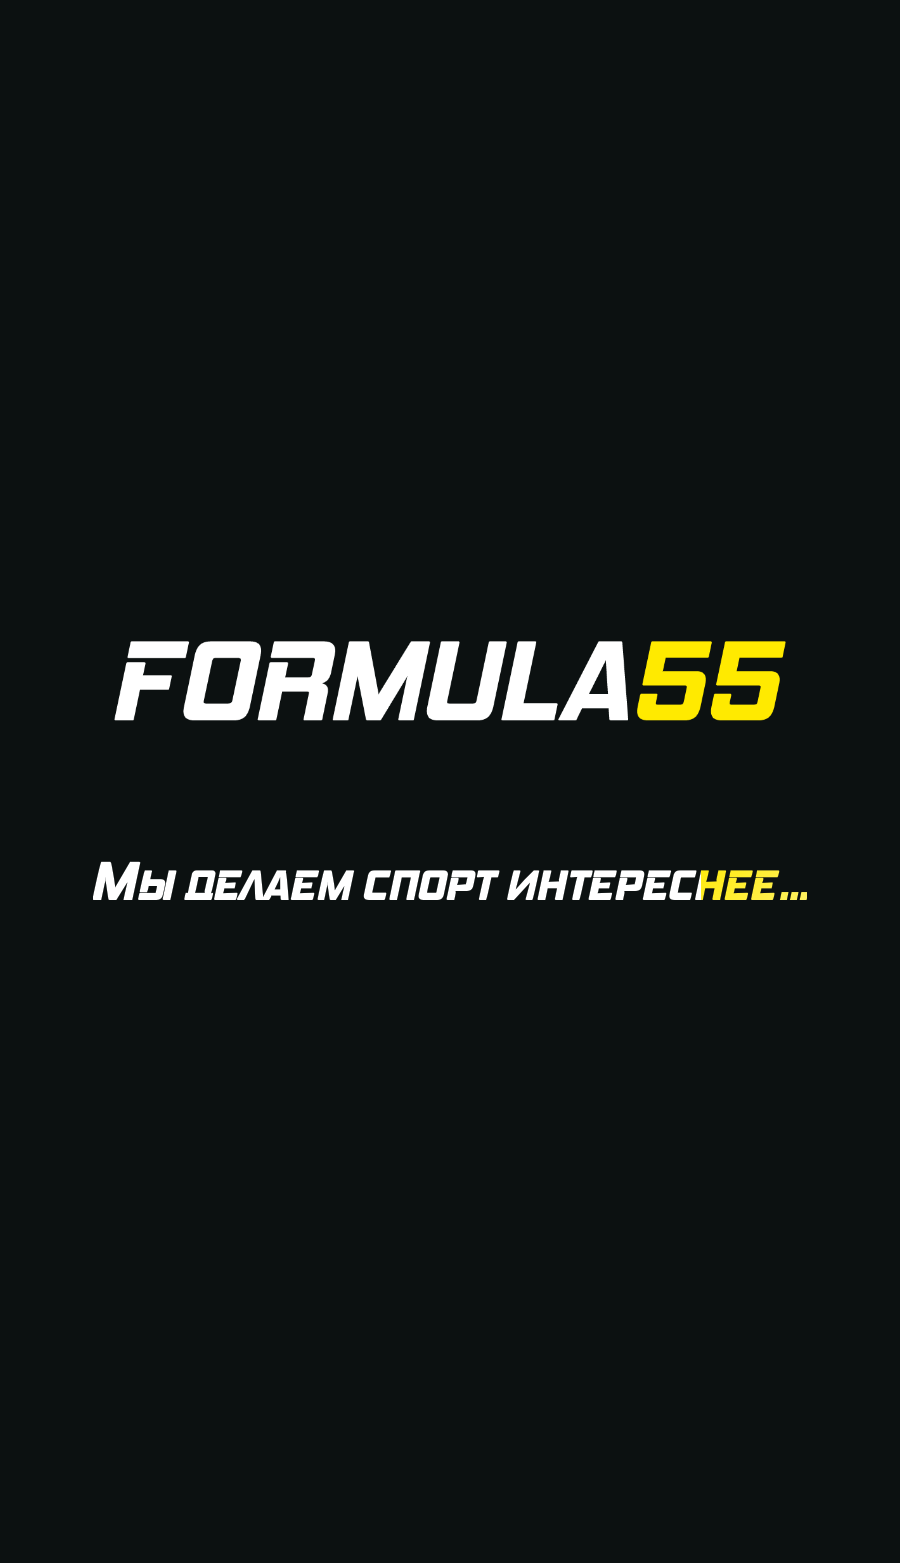 formula55 tj